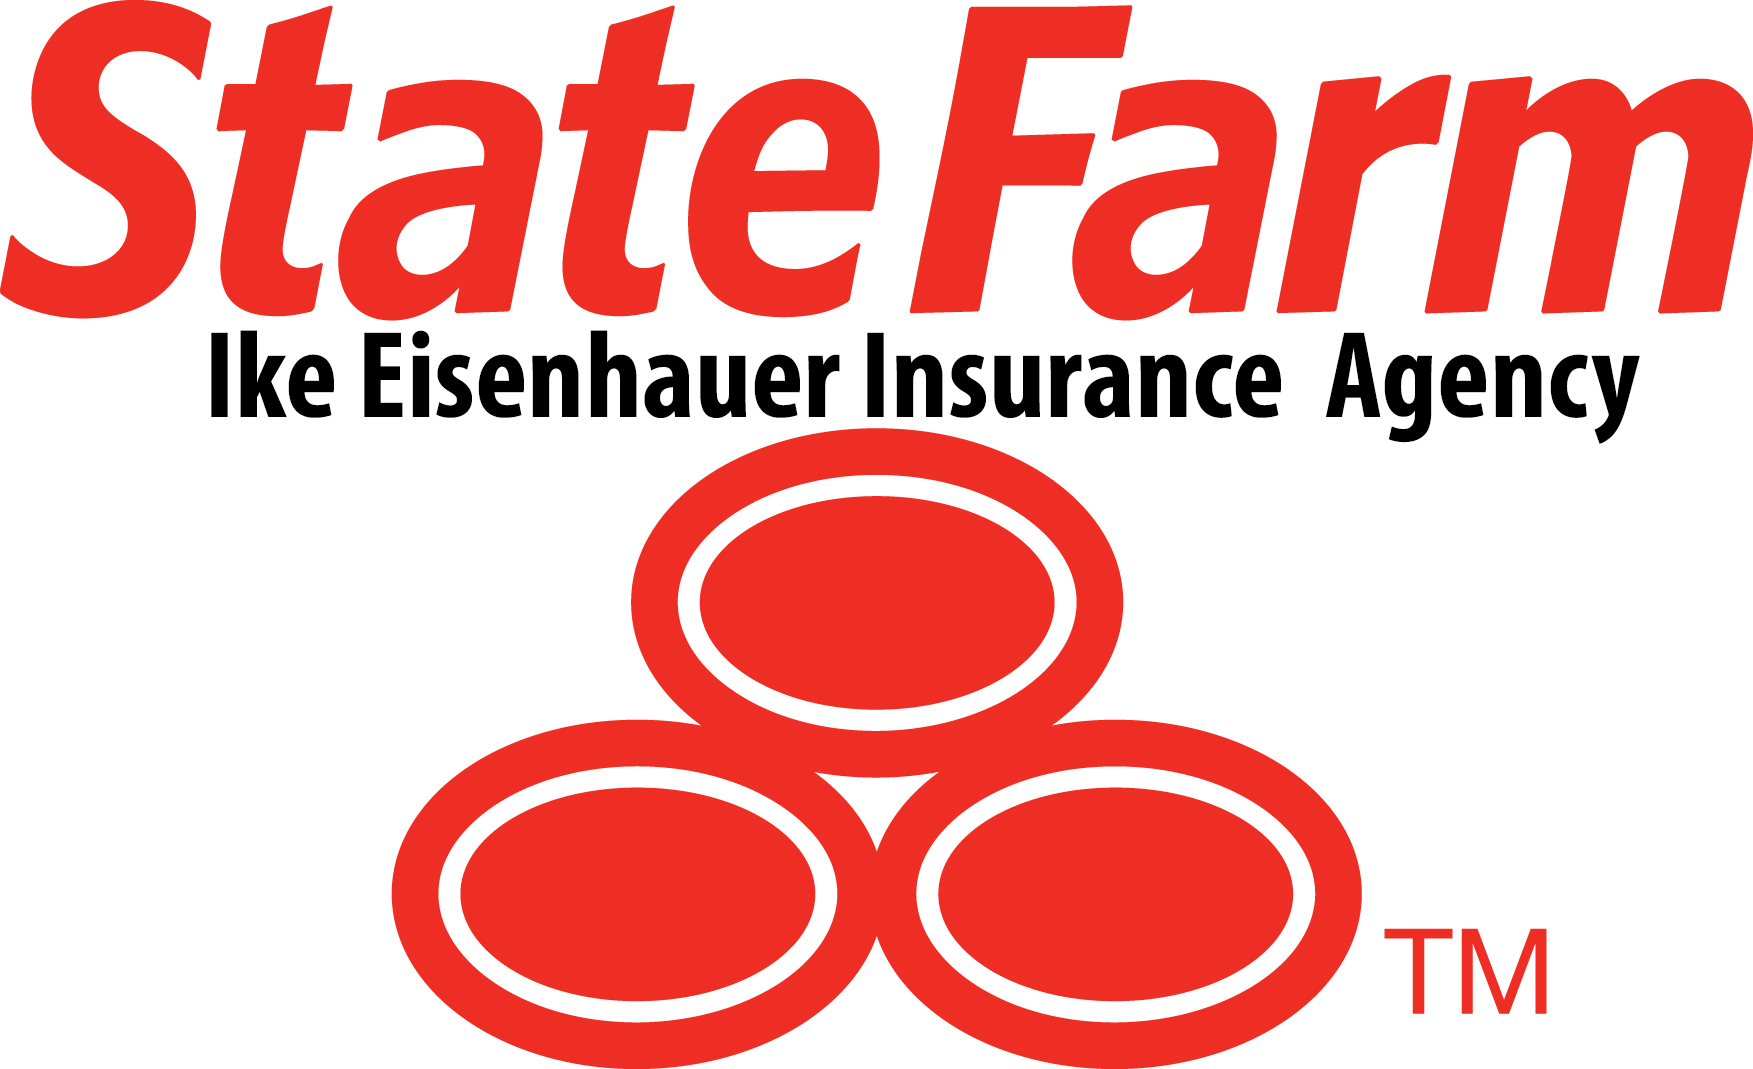 Ike Eisenhauer Insurance